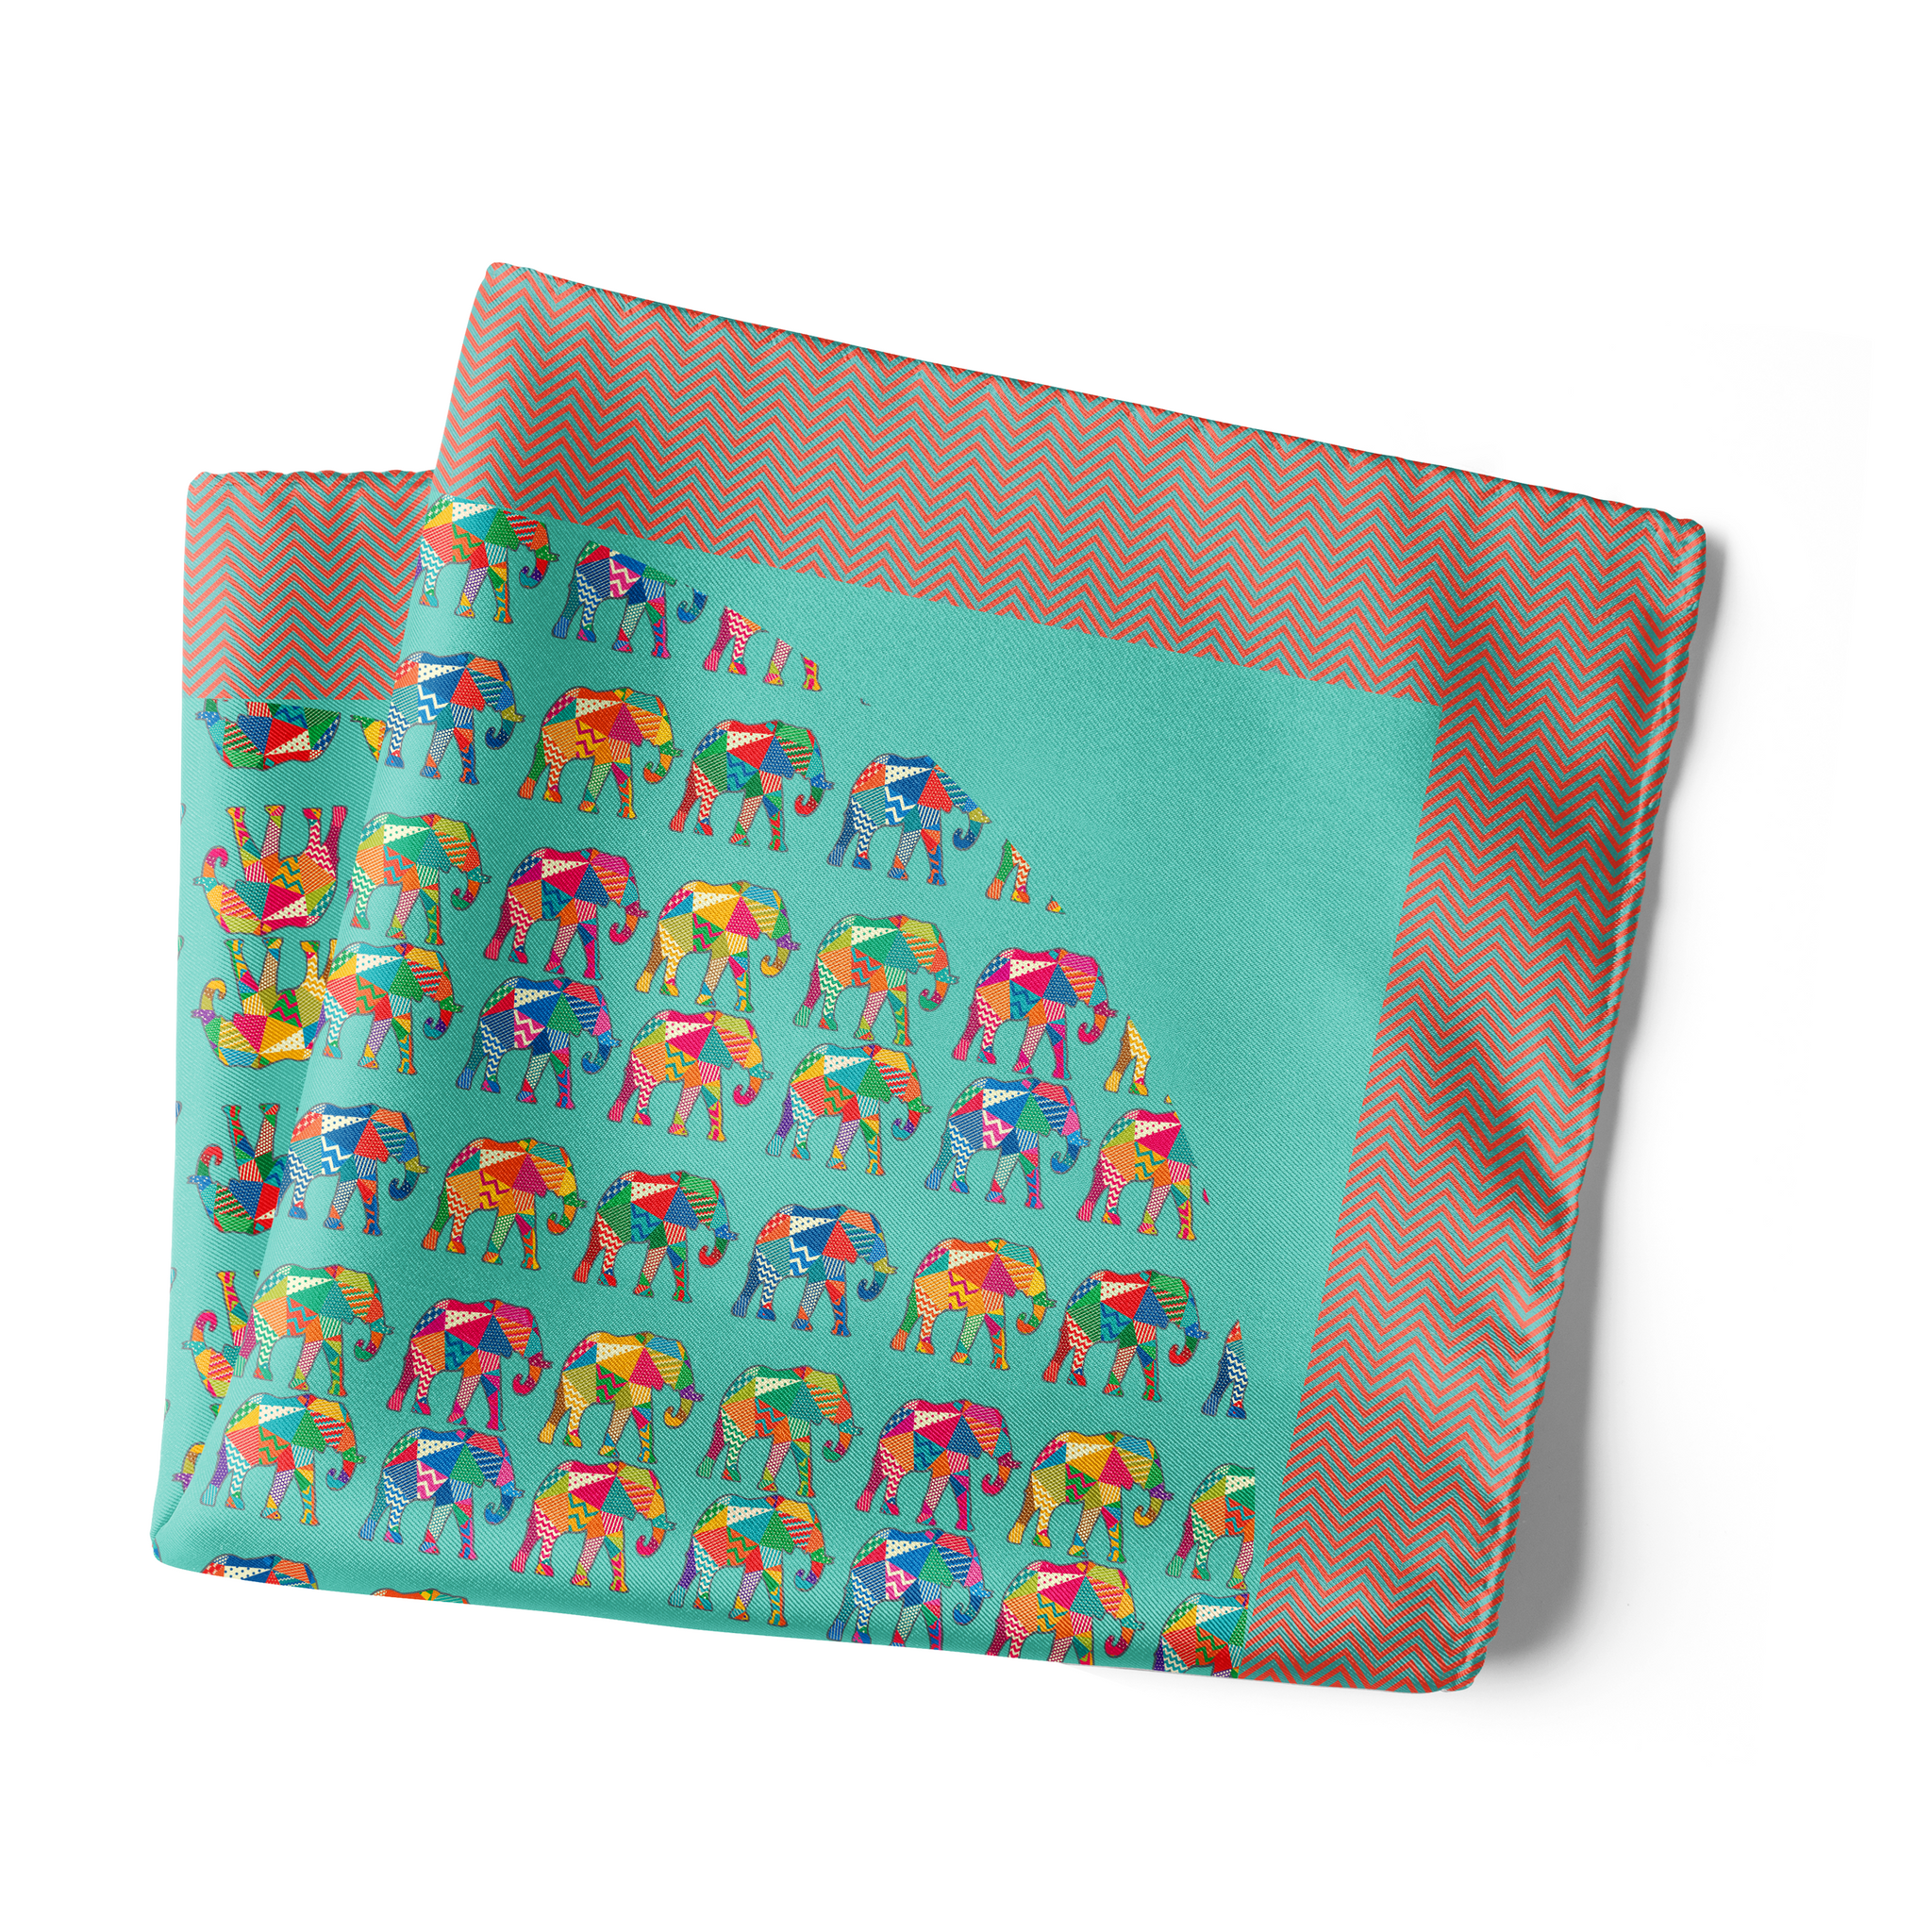 Chokore Multi-coloured Elephants Silk Pocket Square for Men from the Wildlife range